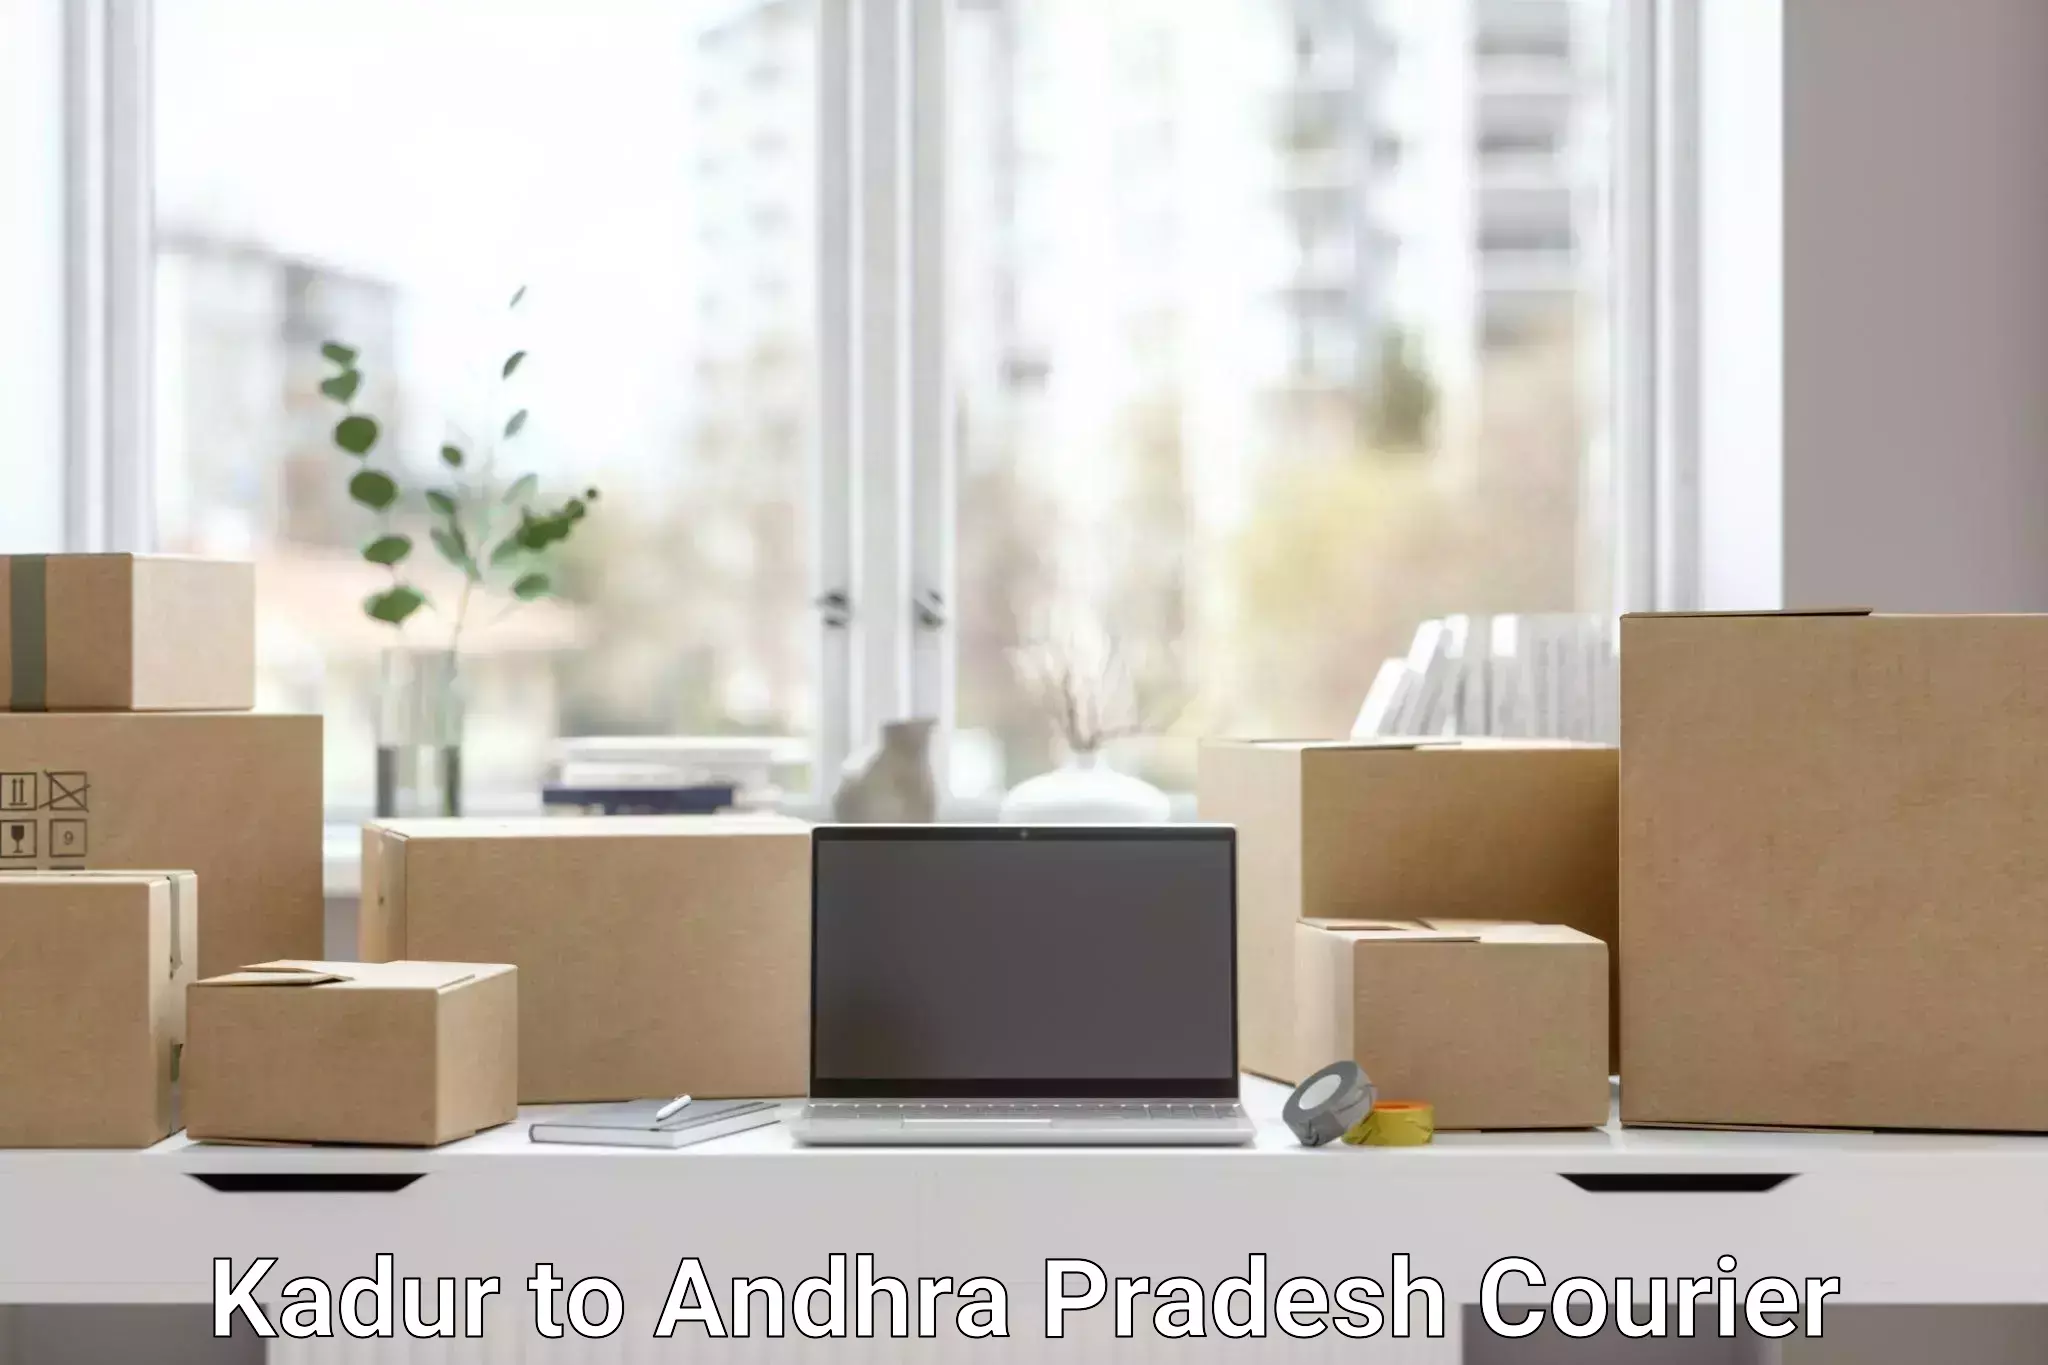 Courier service partnerships Kadur to Andhra Pradesh